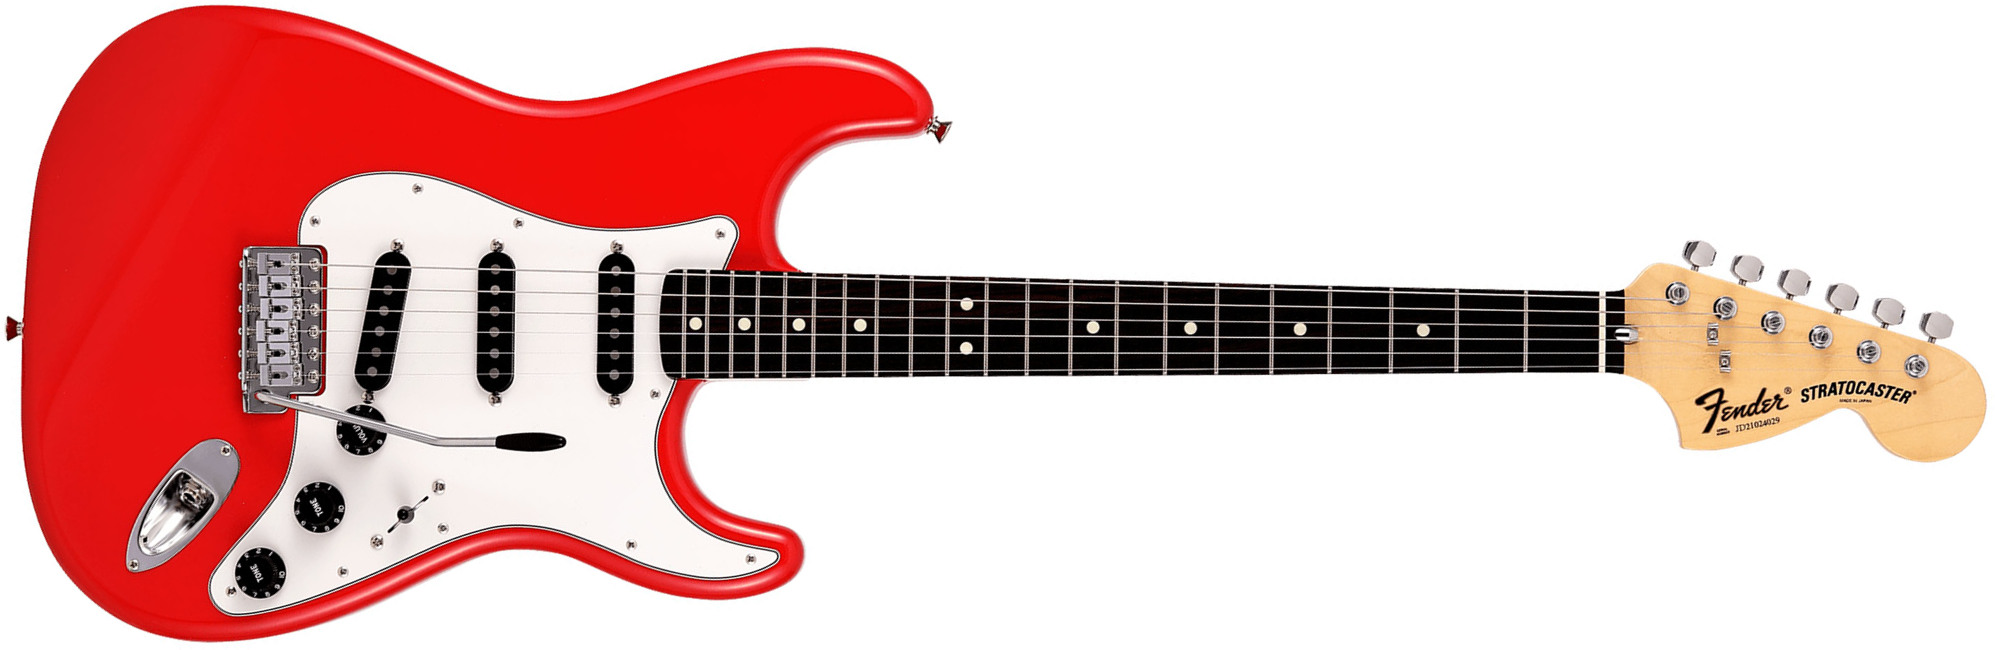 Fender Strat International Color Ltd Jap 3s Trem Rw - Morocco Red - Str shape electric guitar - Main picture